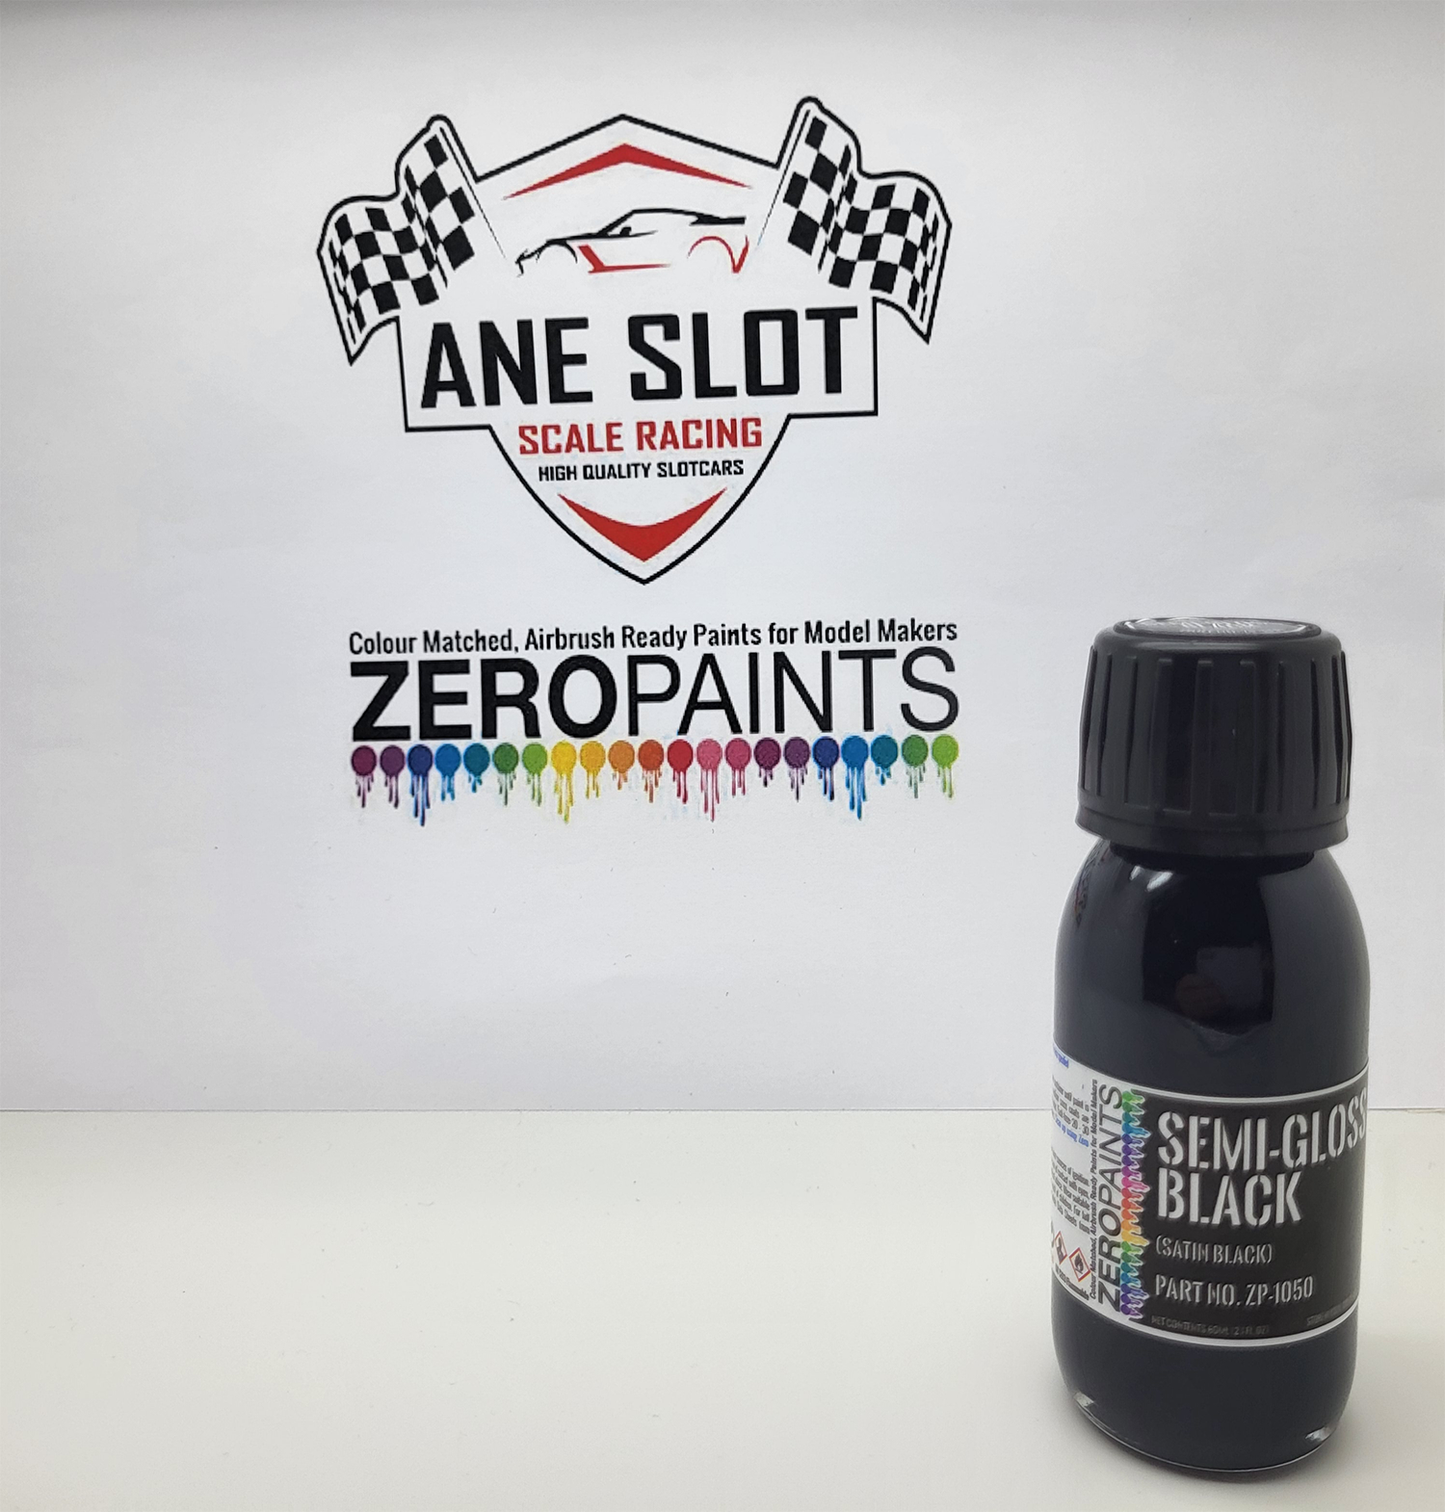 Zeropaints ZP-1050 - "Semi Gloss Black Paint"